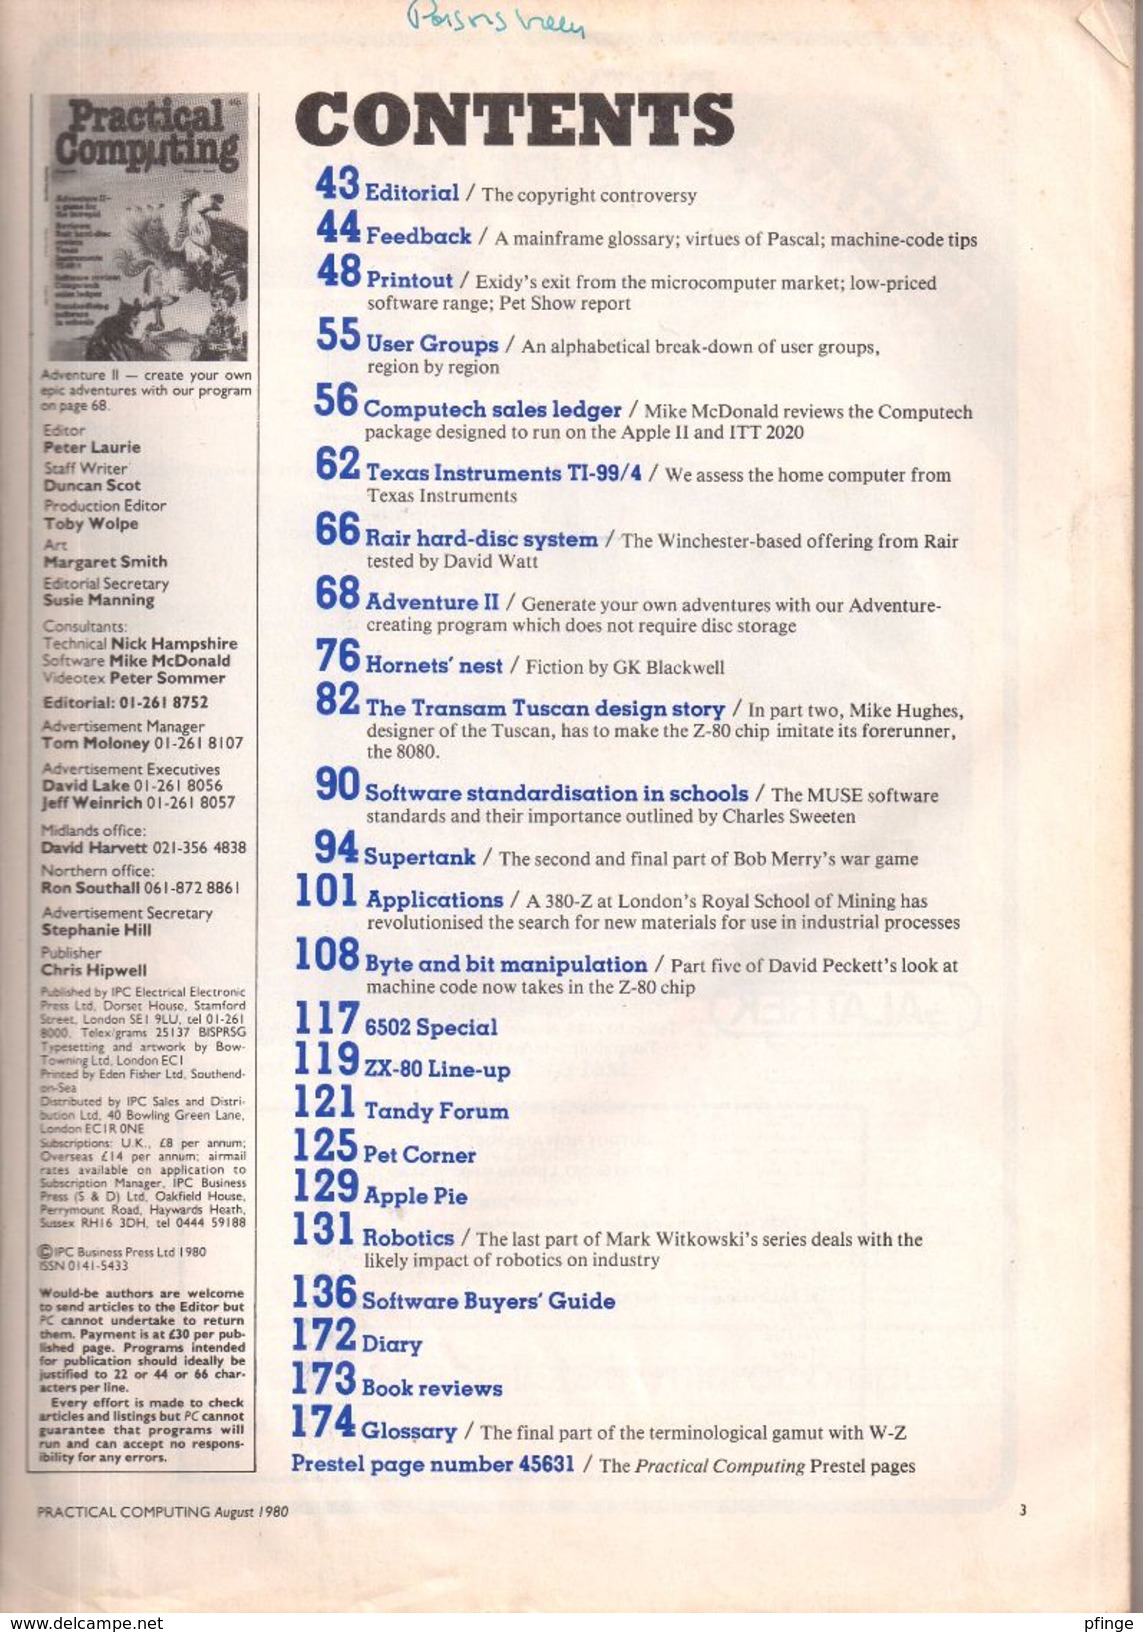 Practical Computing Vol 3 Issue 8, 1980 - Informatica/ IT/ Internet